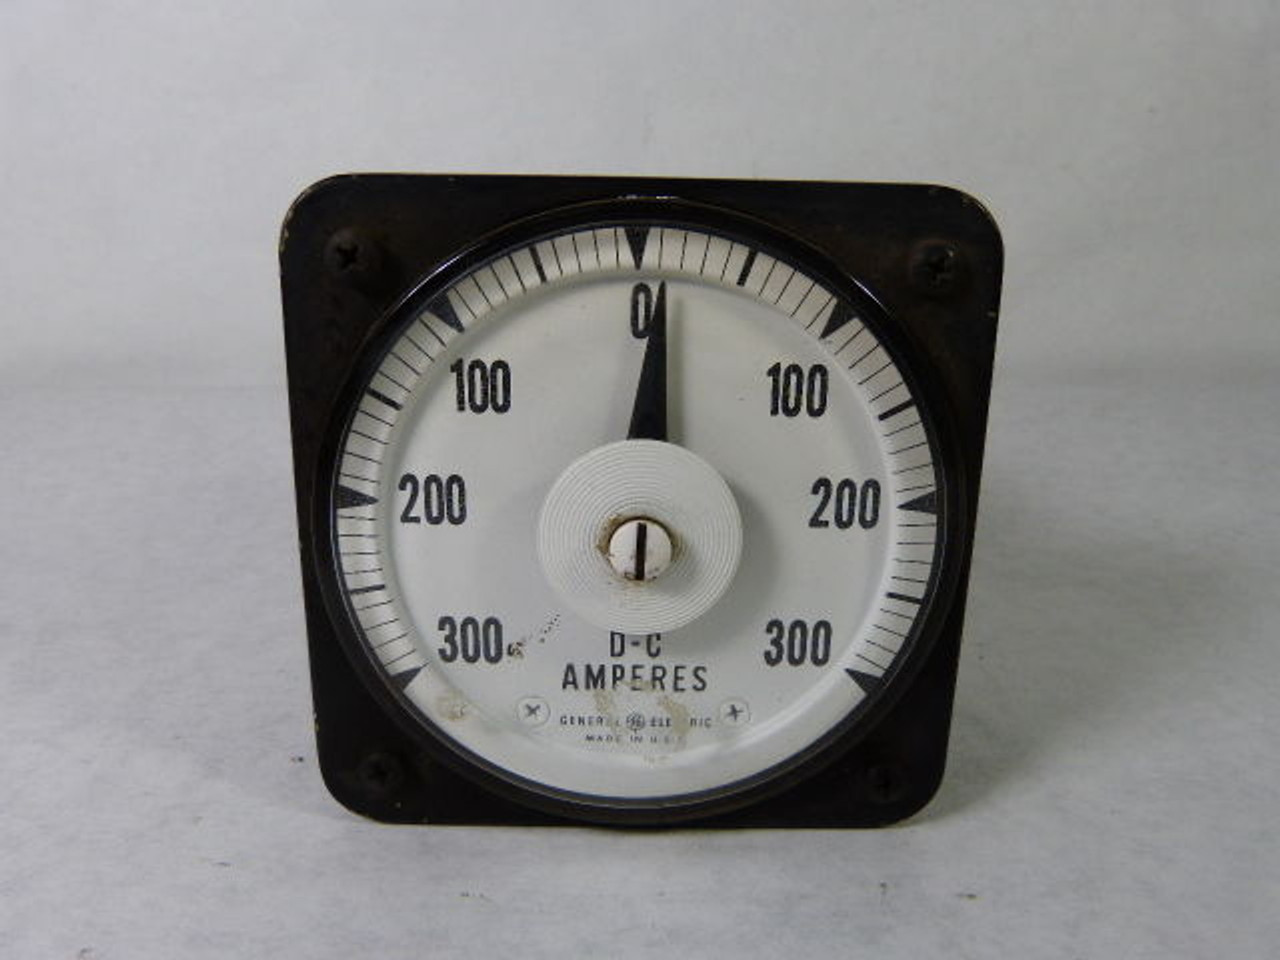 General Electric 300-0-300 DC Amperes Meter USED